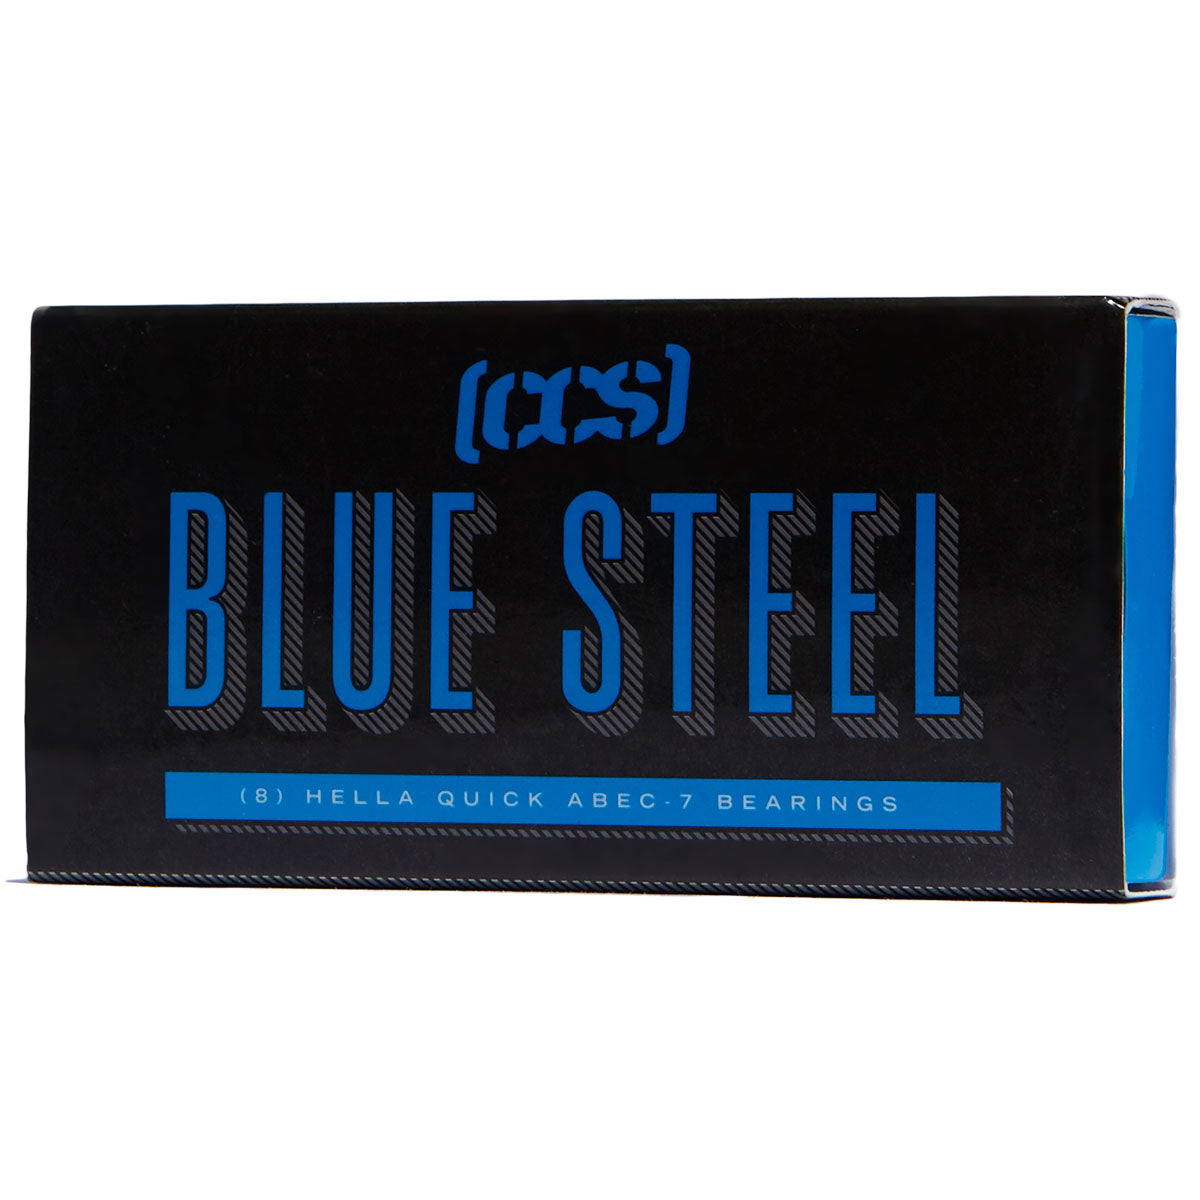 CCS Blue Steel Abec 7 Skateboard Bearings - Packaged image 2